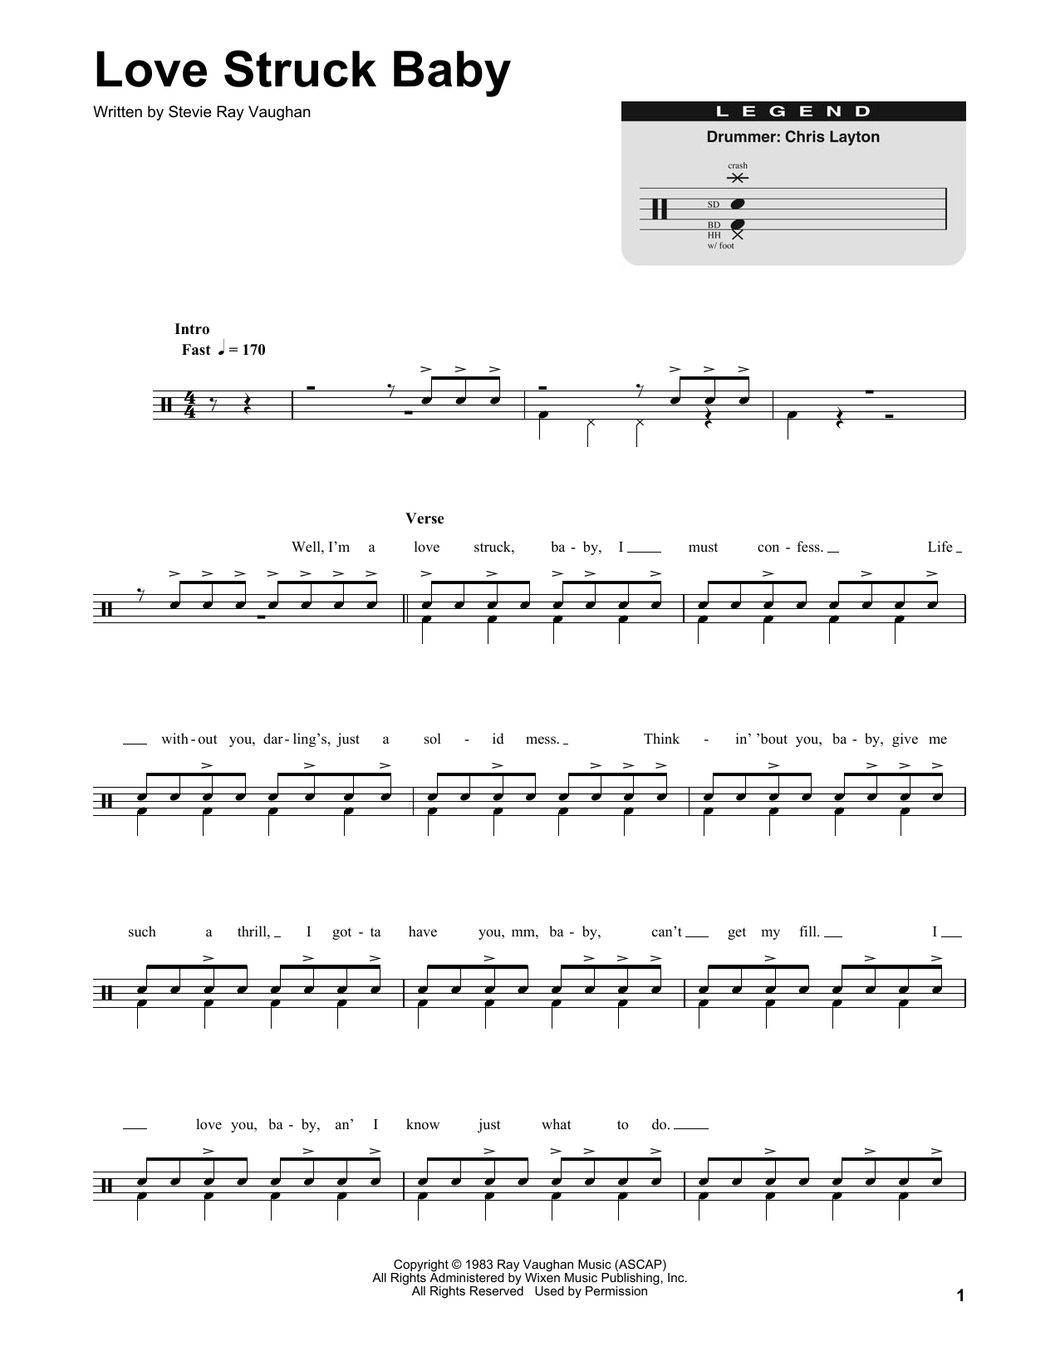 Love Struck Baby - Stevie Ray Vaughan - Full Drum Transcription / Drum Sheet Music - SheetMusicDirect DT